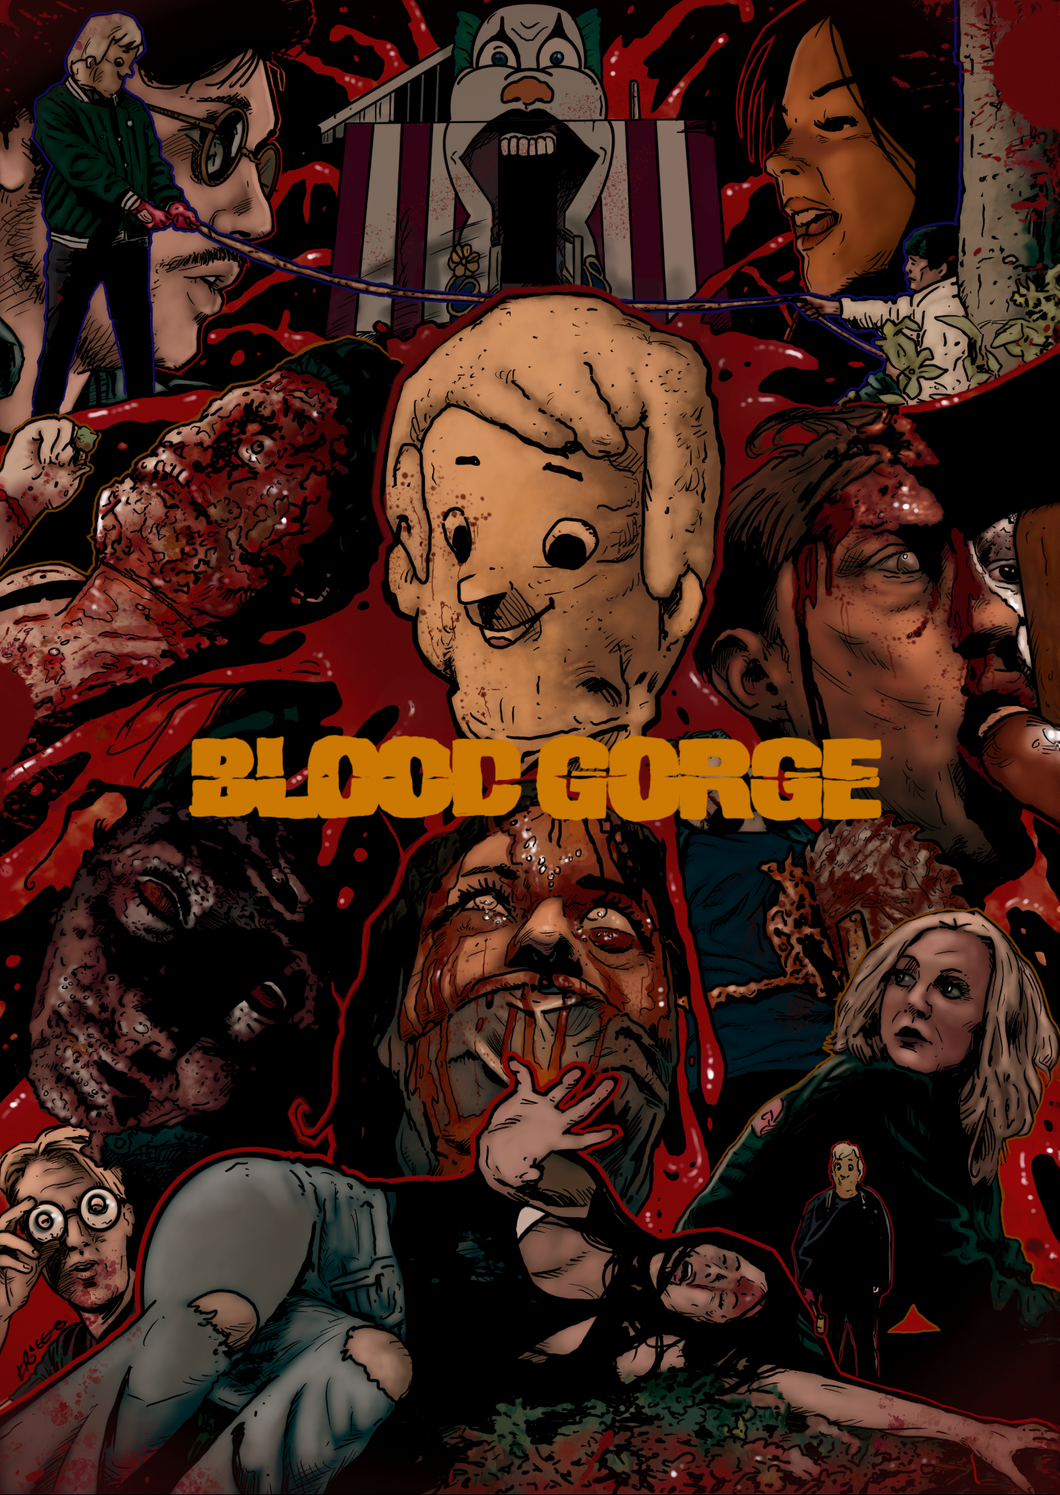 Blood Gorge - Limited 500 Slipcase Edition